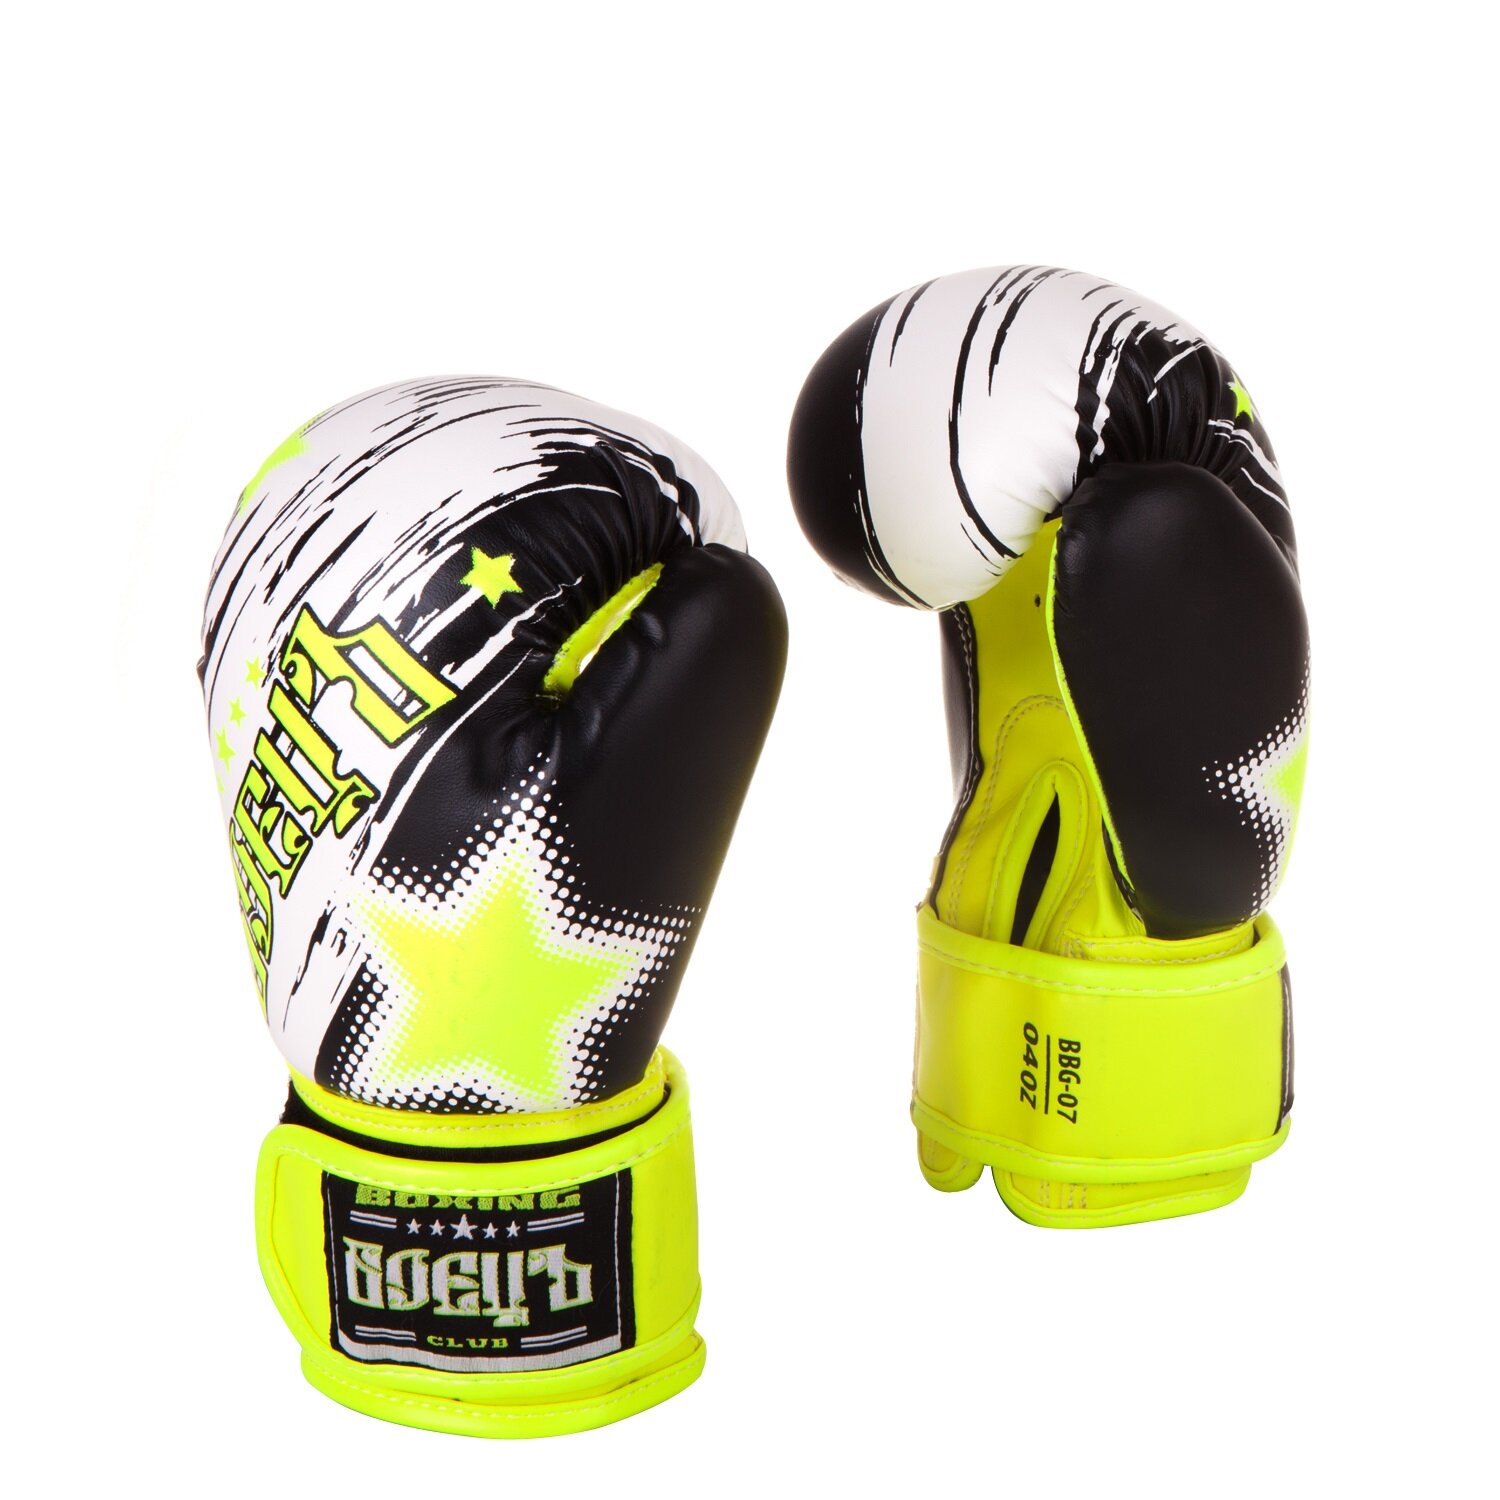 Боксерские перчатки боецъ Bbg-07 зеленые (2oz) размер 6 oz